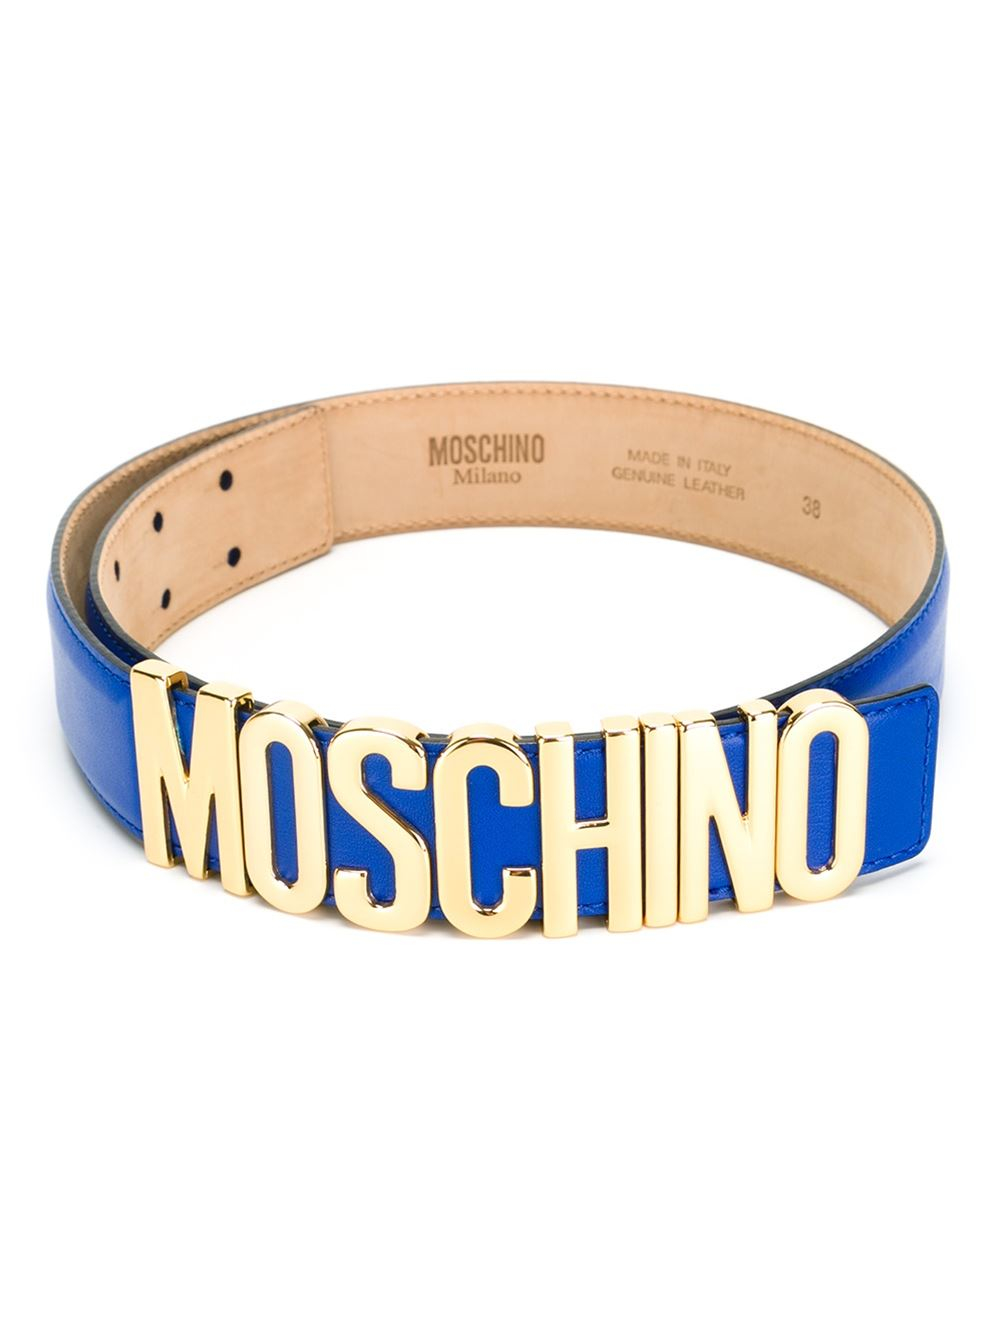 blue moschino belt